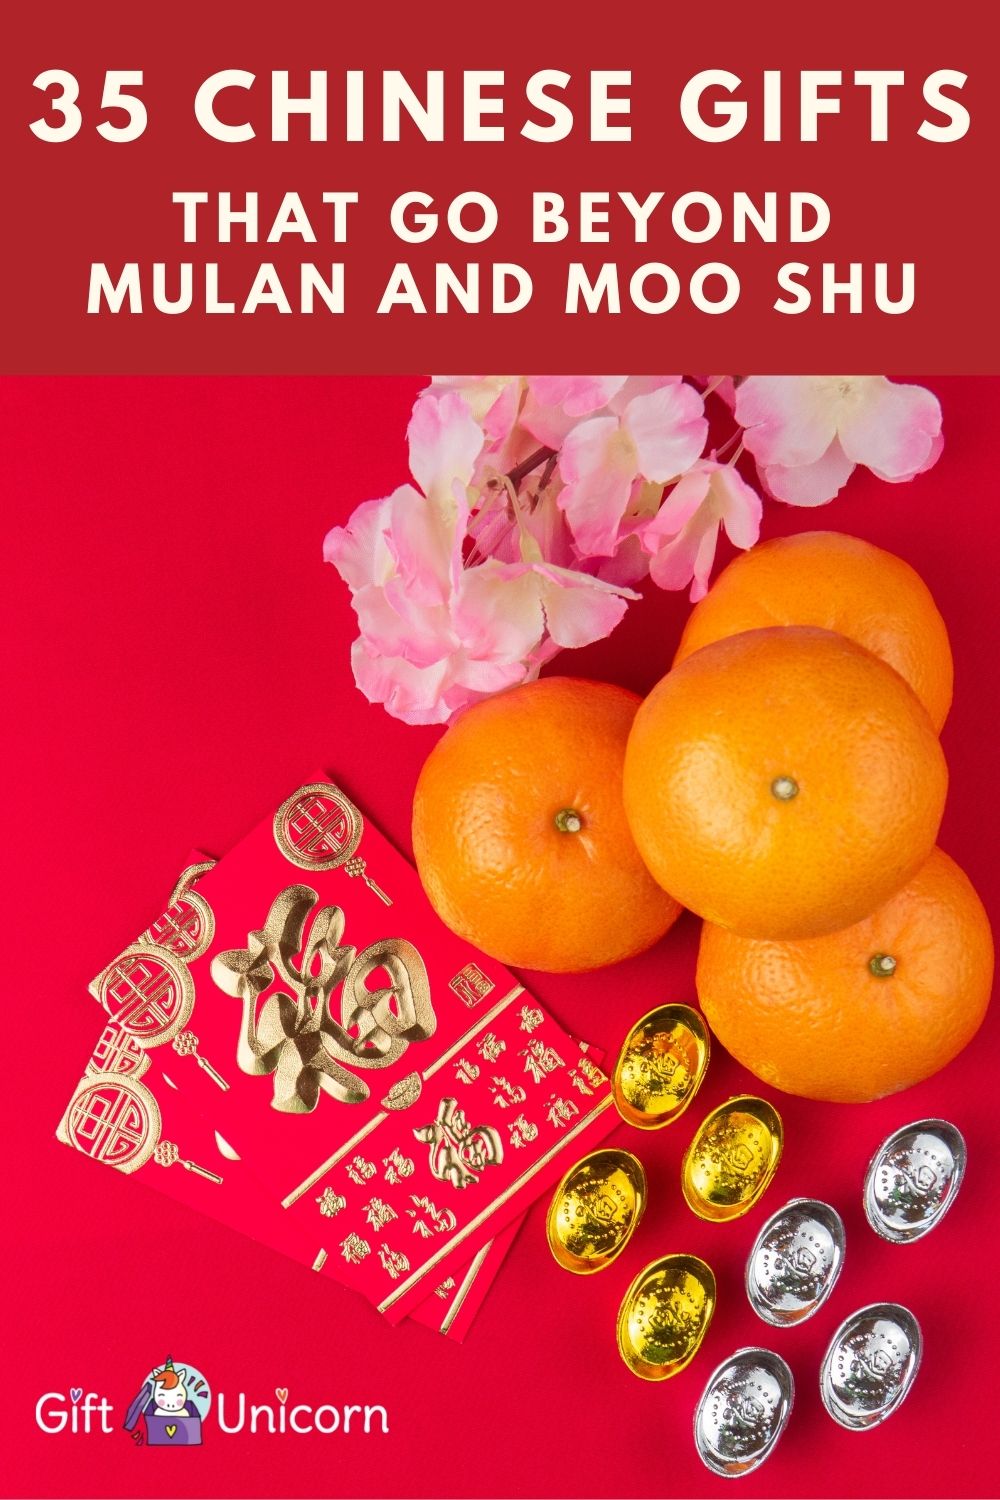 35 Chinese Gifts That Go Beyond Mulan and Moo Shu - pinterest pin image